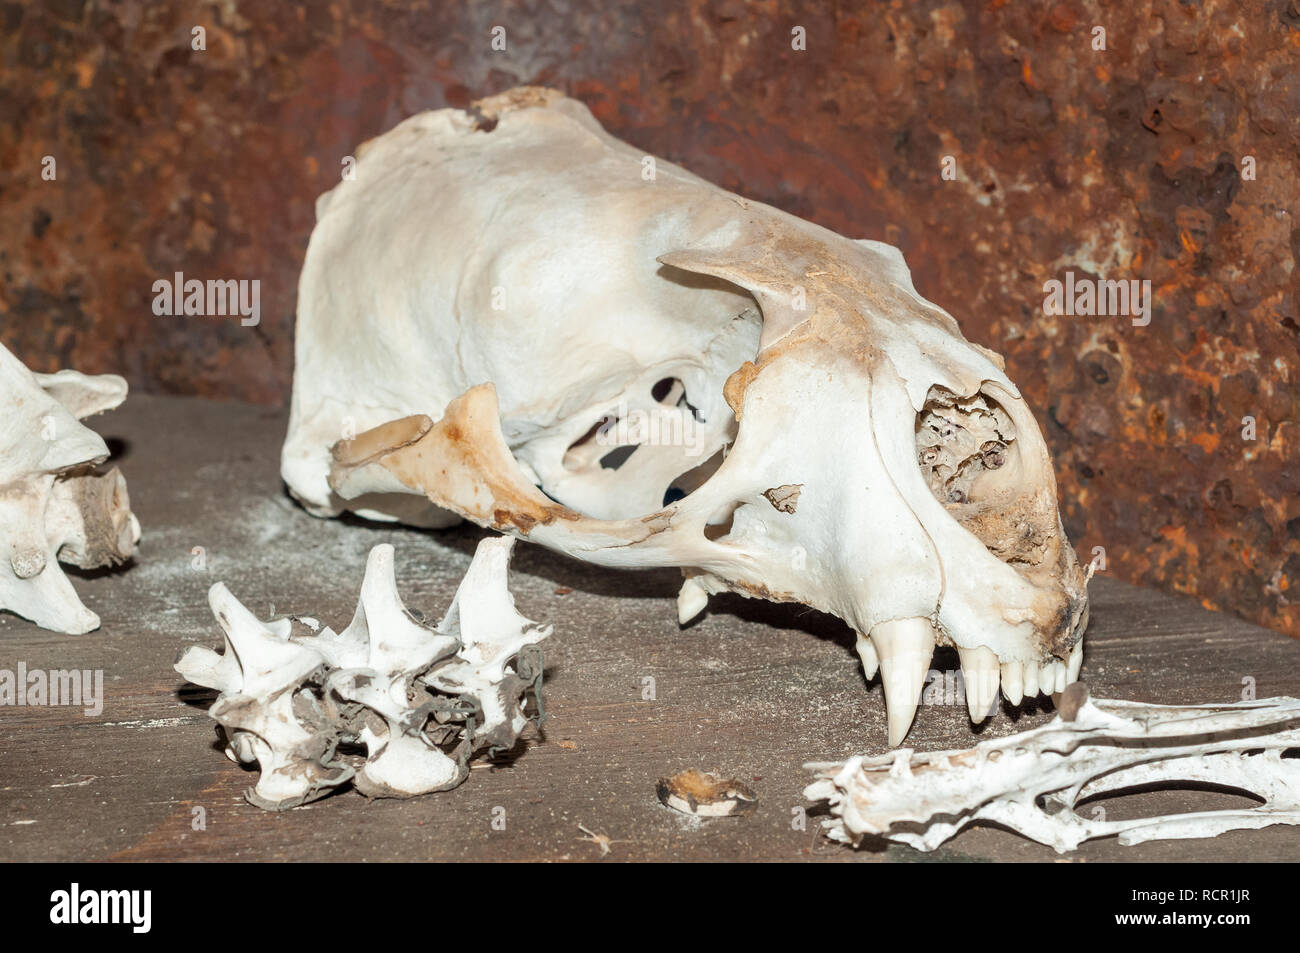 Brown fur seal skull, Cape cross lodge museum, Namibia Stock Photo